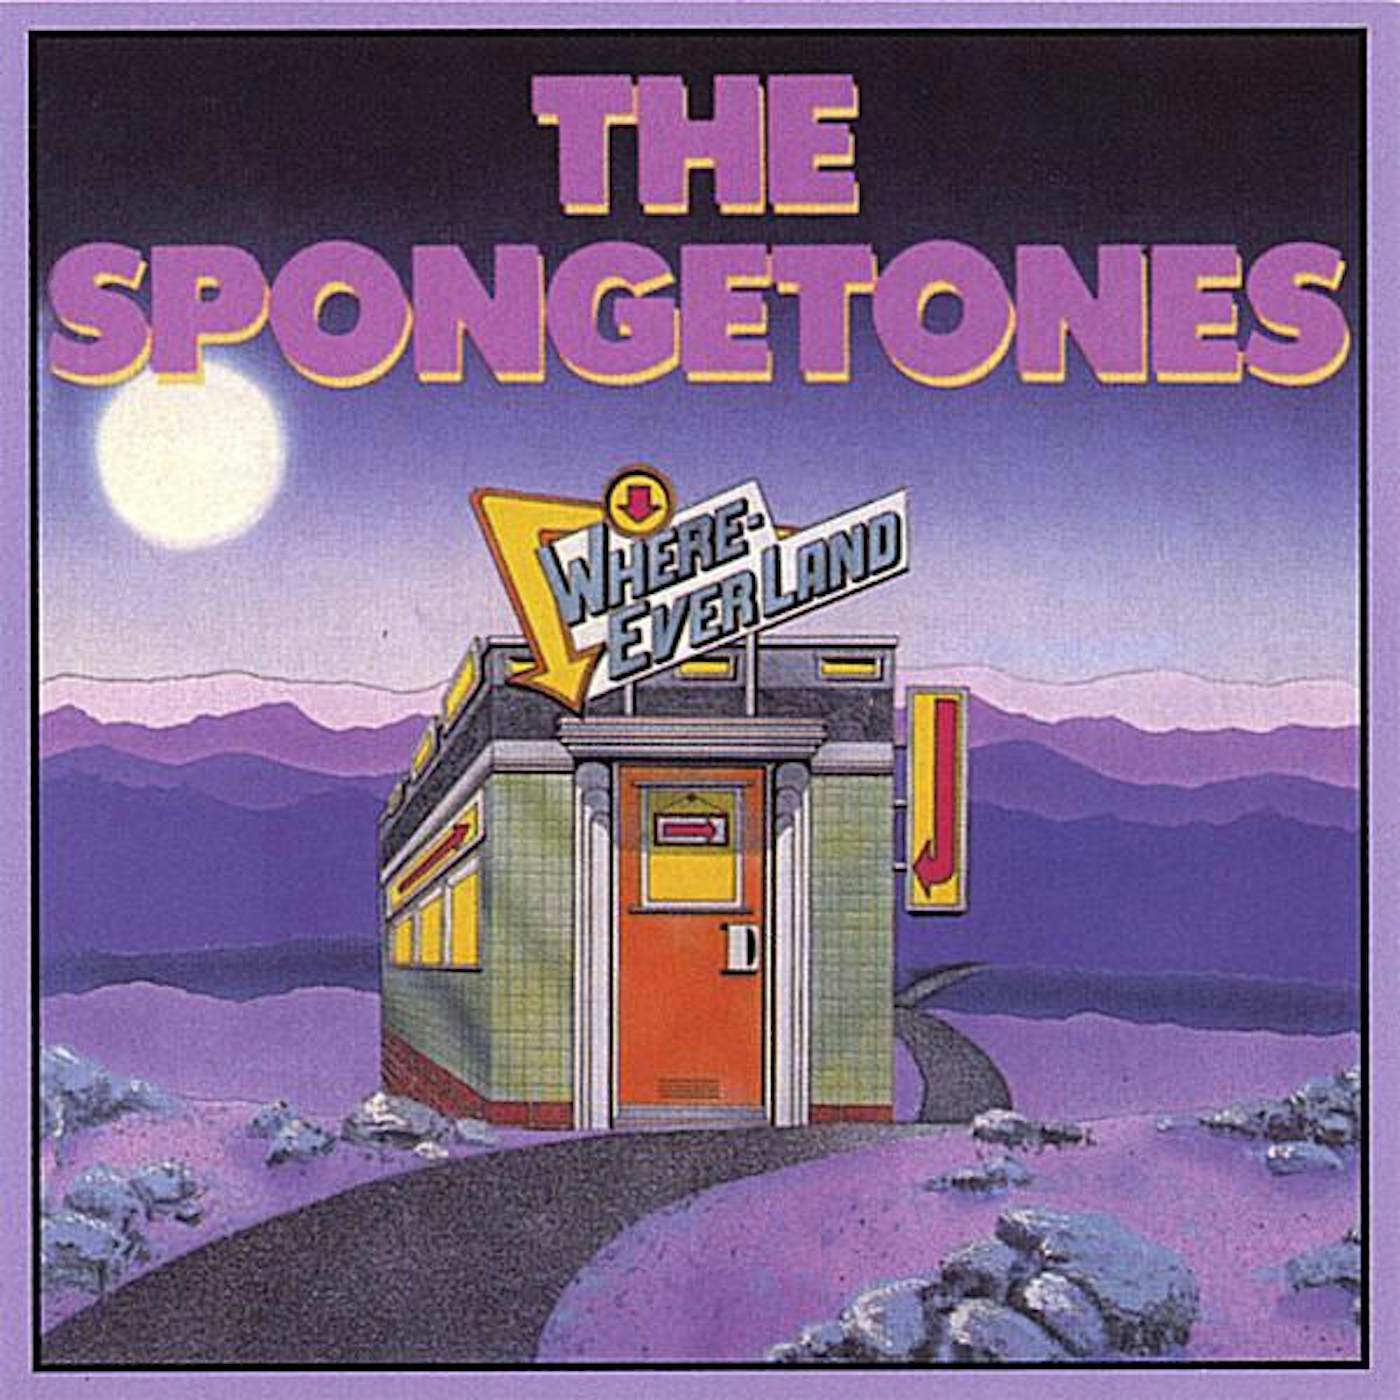 The Spongetones WHERE-EVER-LAND CD